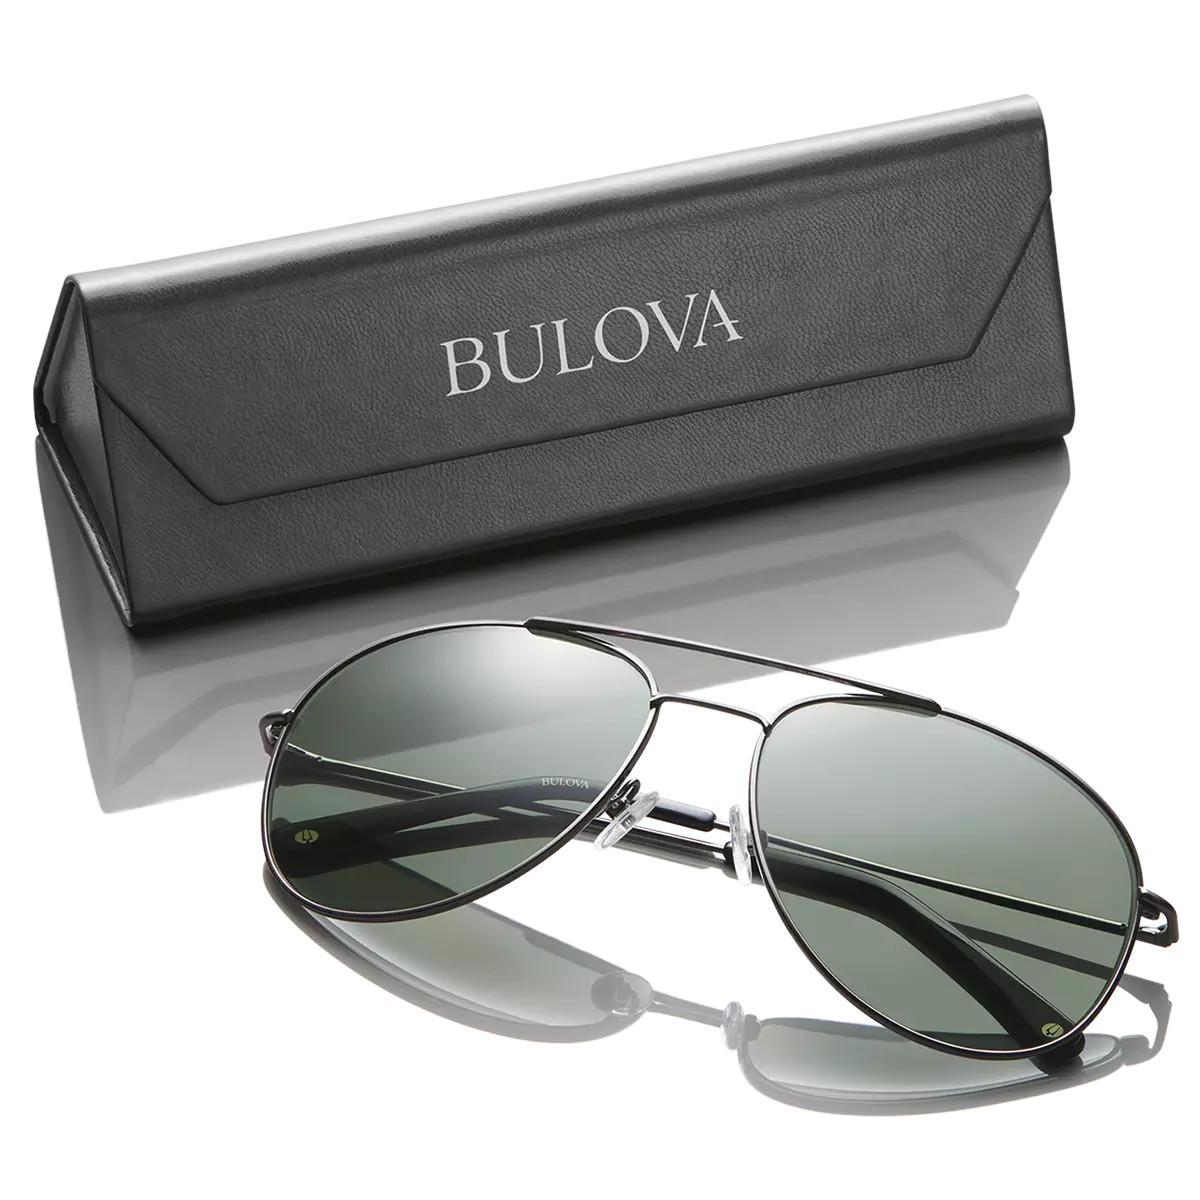 BULOVA Ixtapa Eyeglasses Frames - Havana/Mint — Big Box Outlet Store